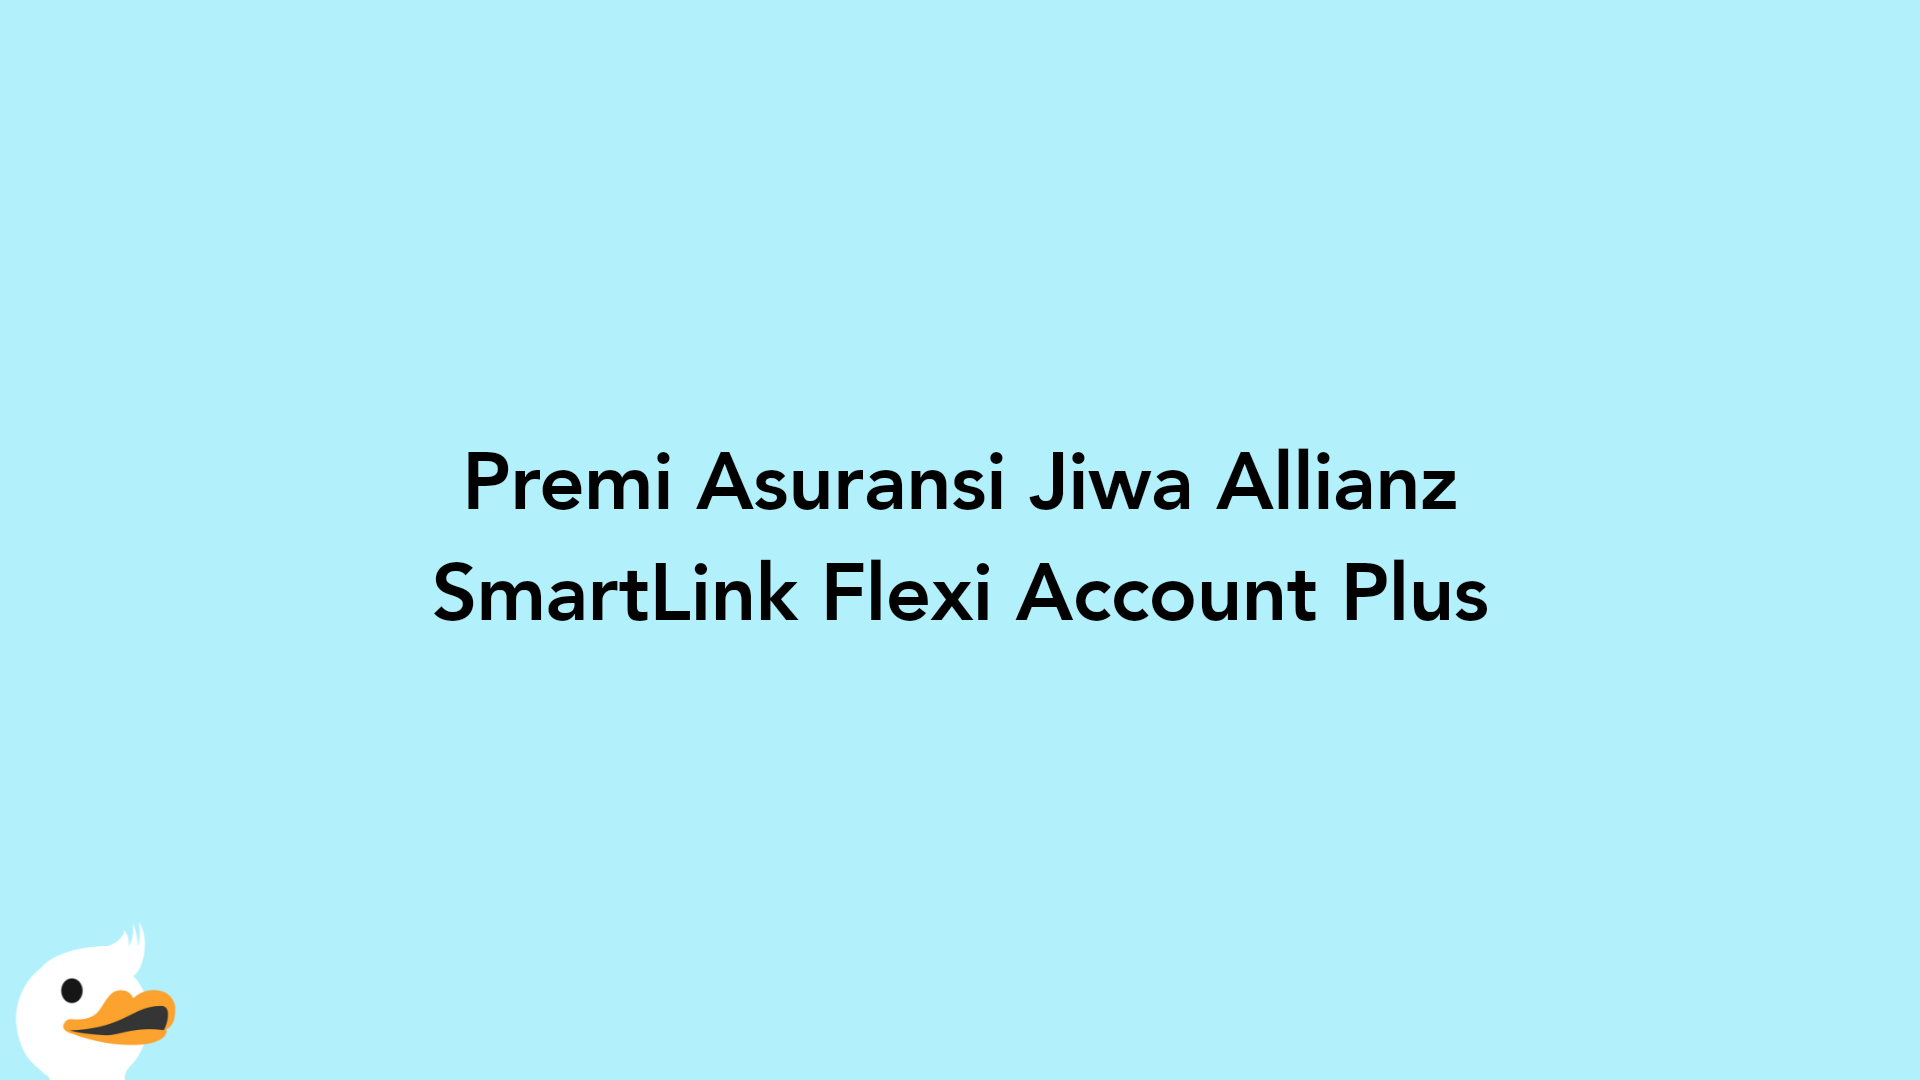 Premi Asuransi Jiwa Allianz SmartLink Flexi Account Plus